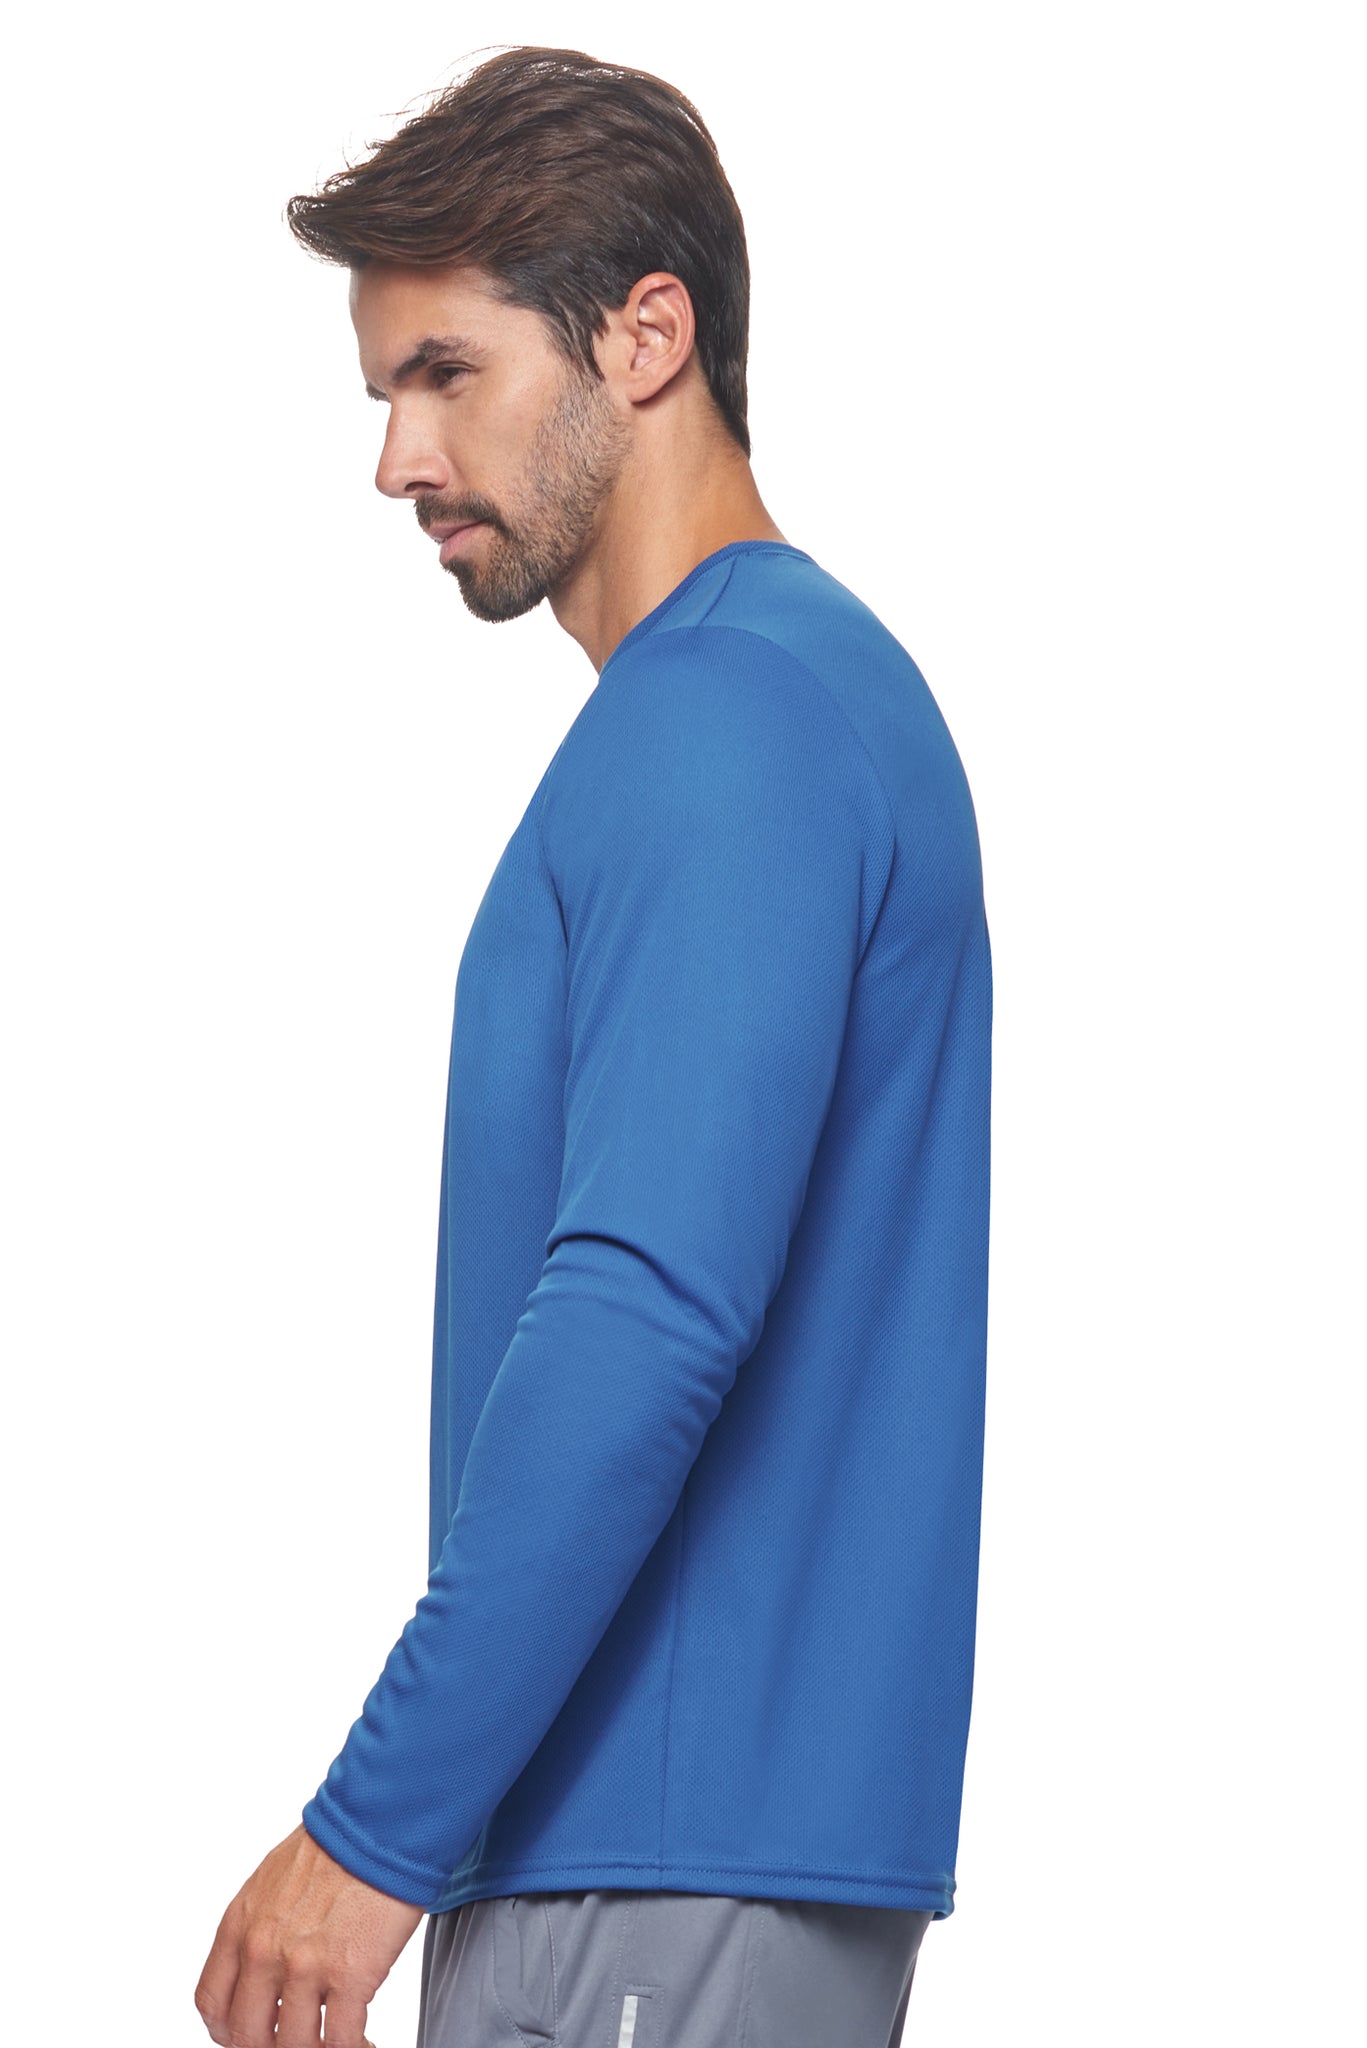 Expert Brand Wholesale Men's Oxymesh Performance Long Sleeve Tec Tee Imported AJ901 royal blue image 2#royal-blue